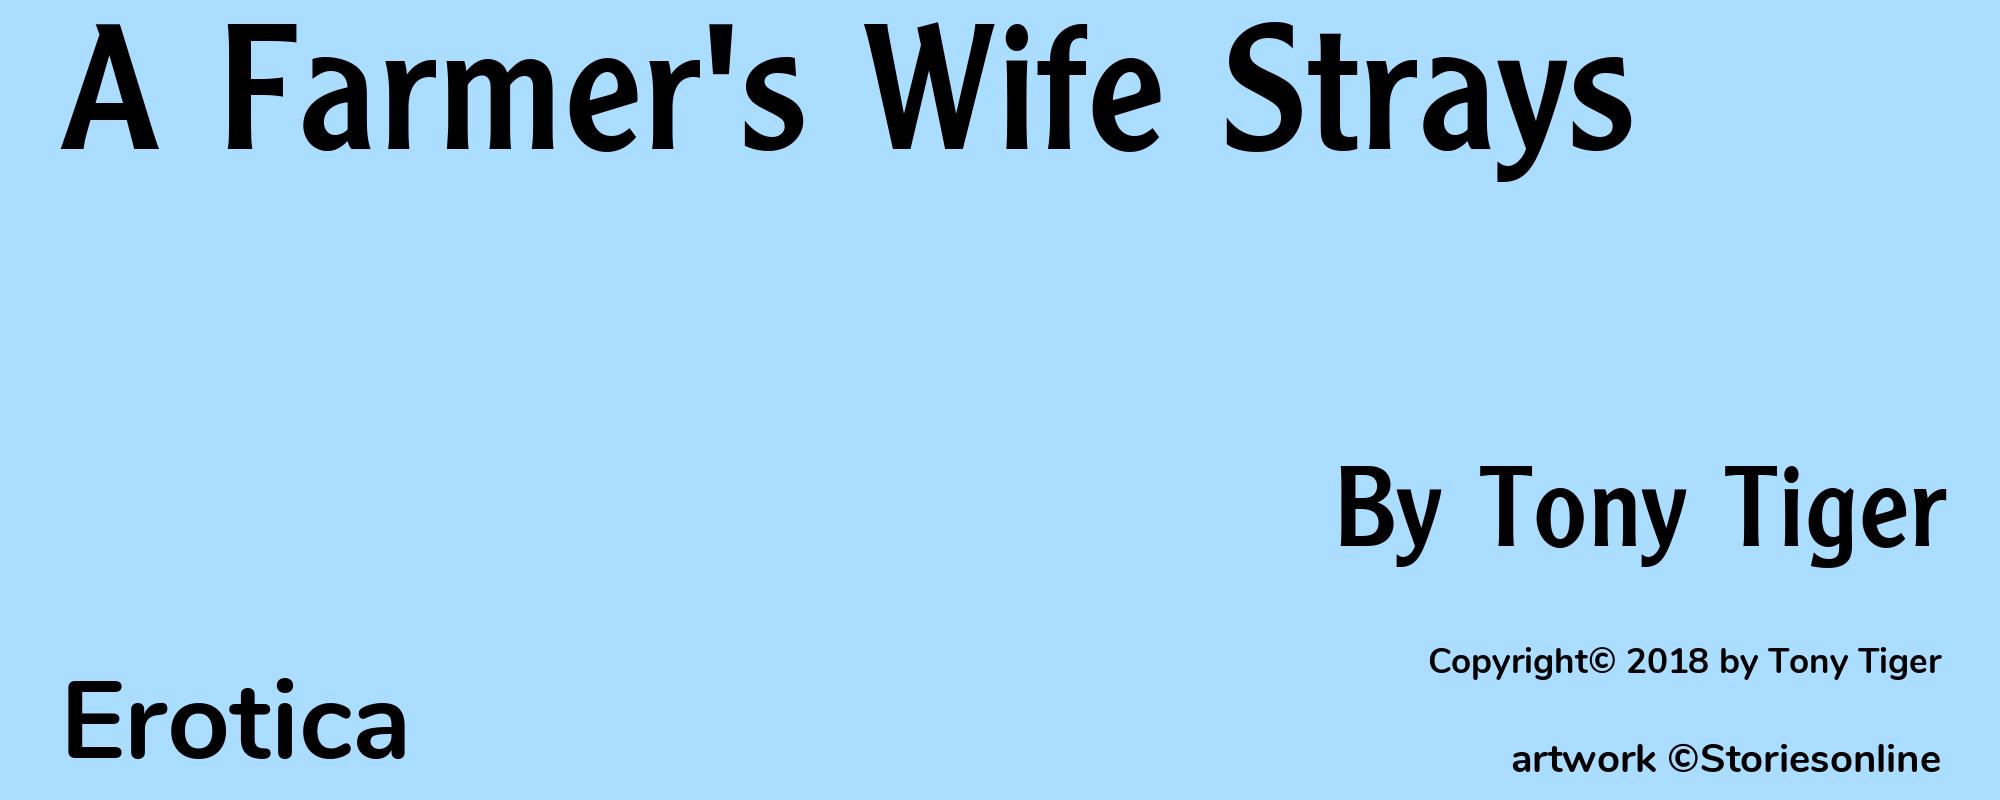 A Farmer's Wife Strays - Cover